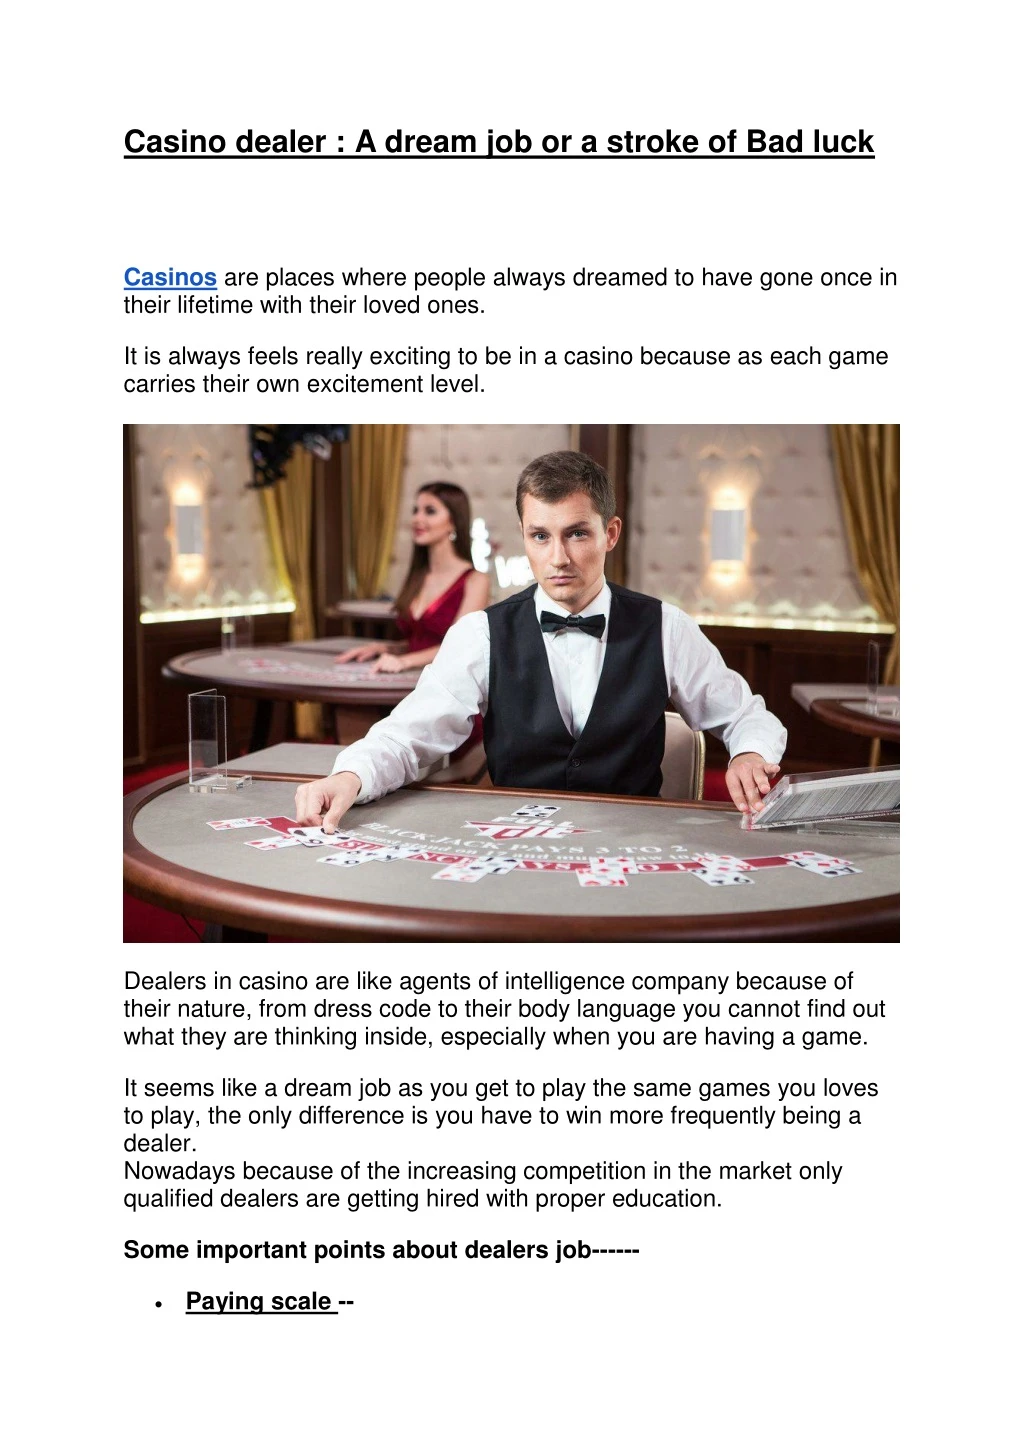 casino dealer a dream job or a stroke of bad luck